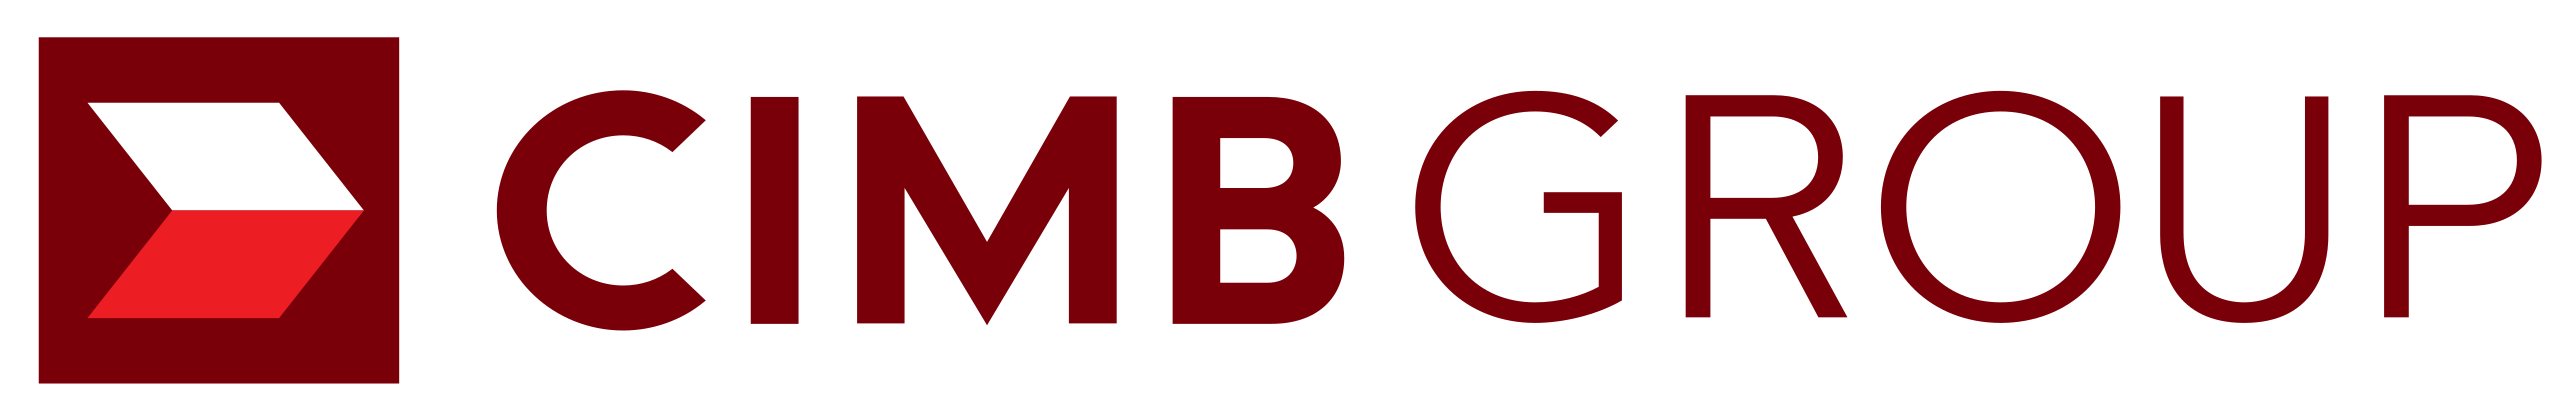 CIMB Brand Logo